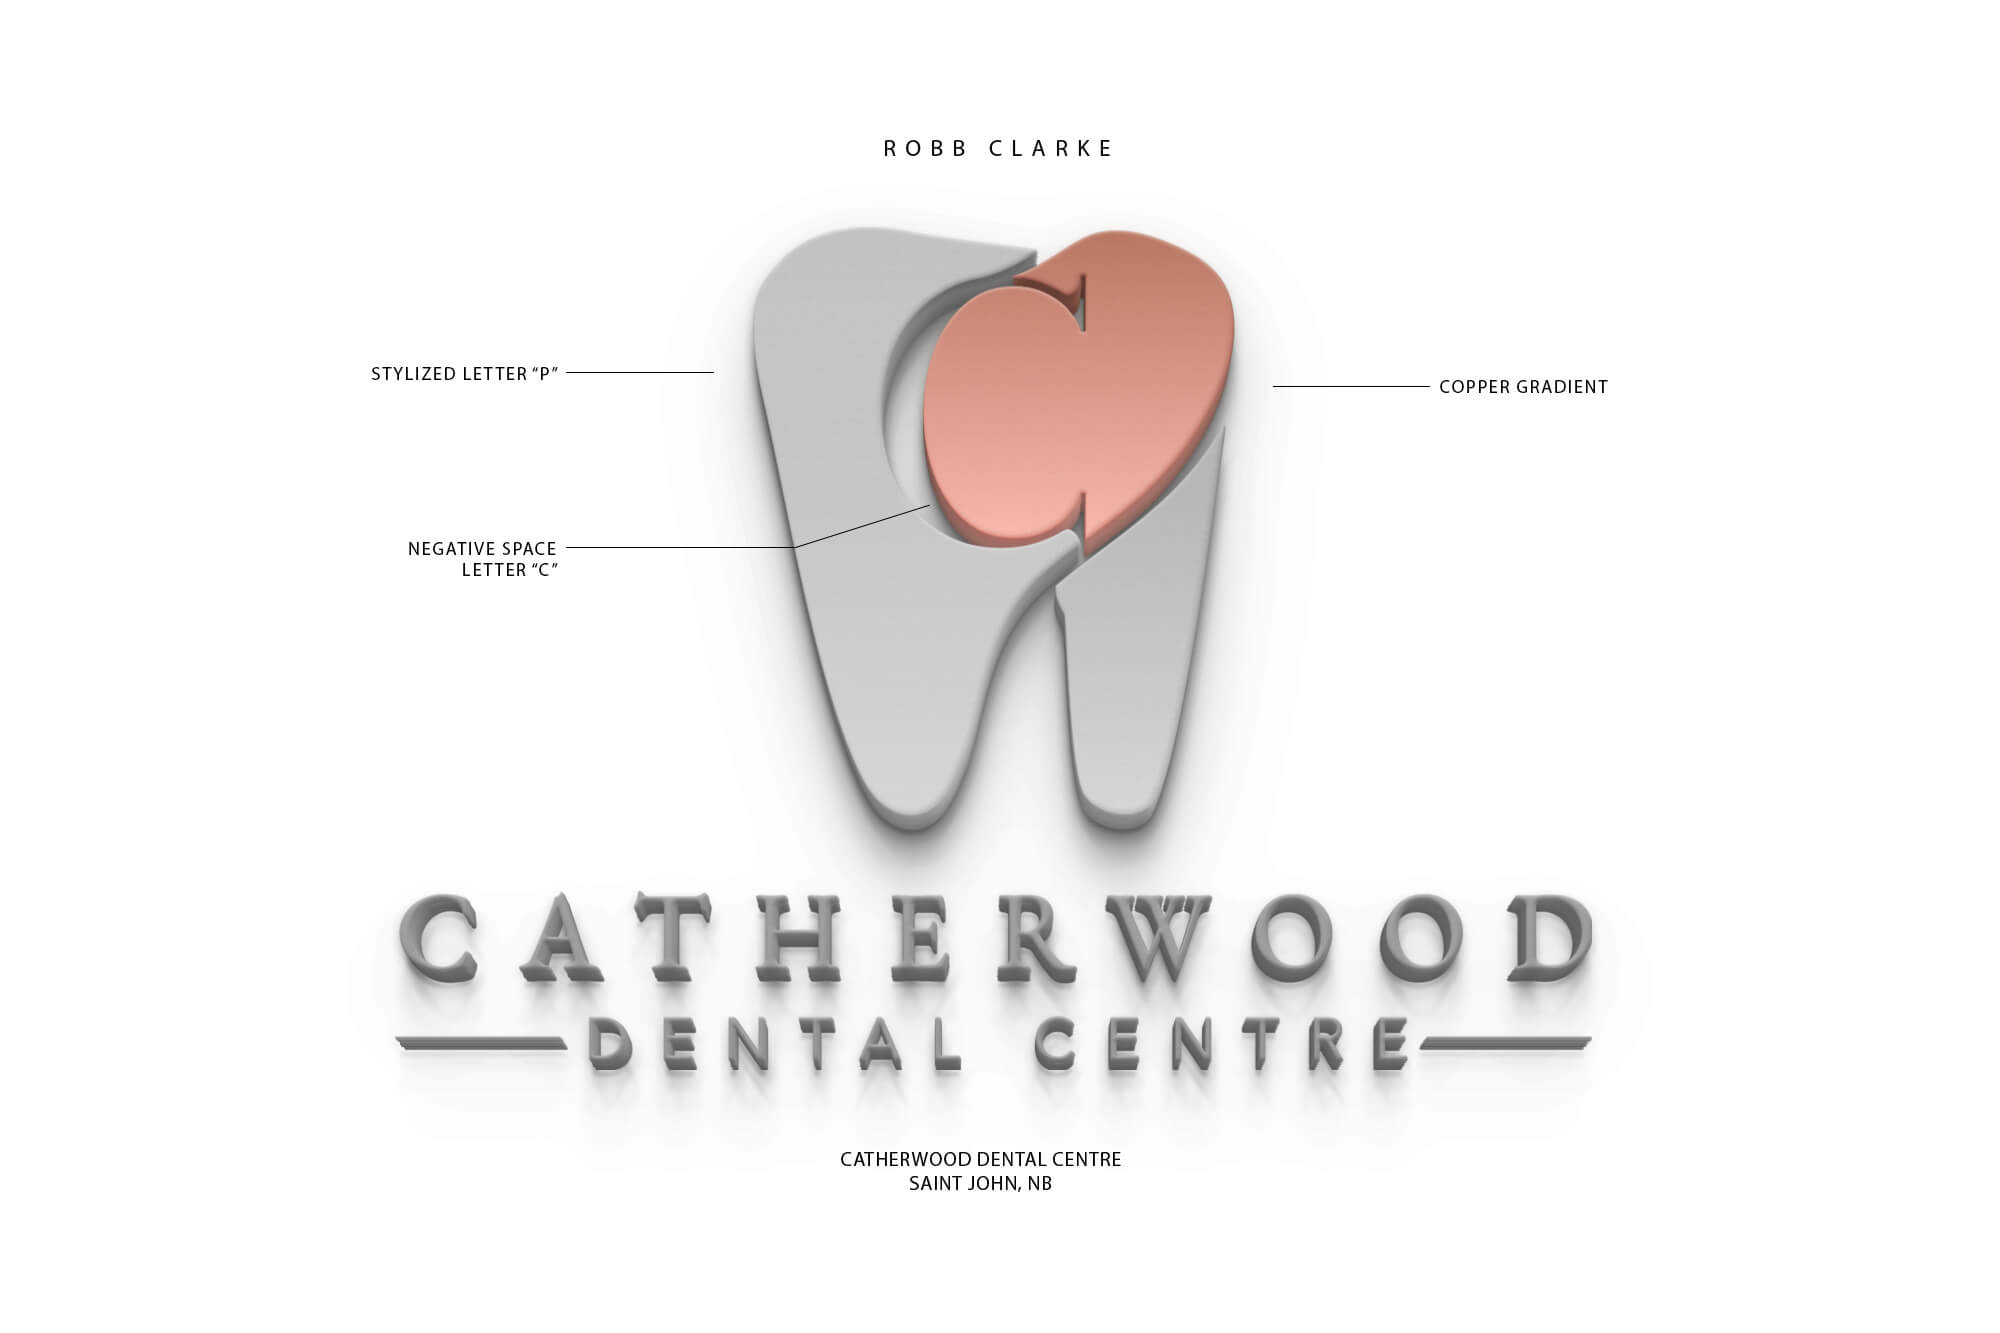 Catherwood Dental Centre